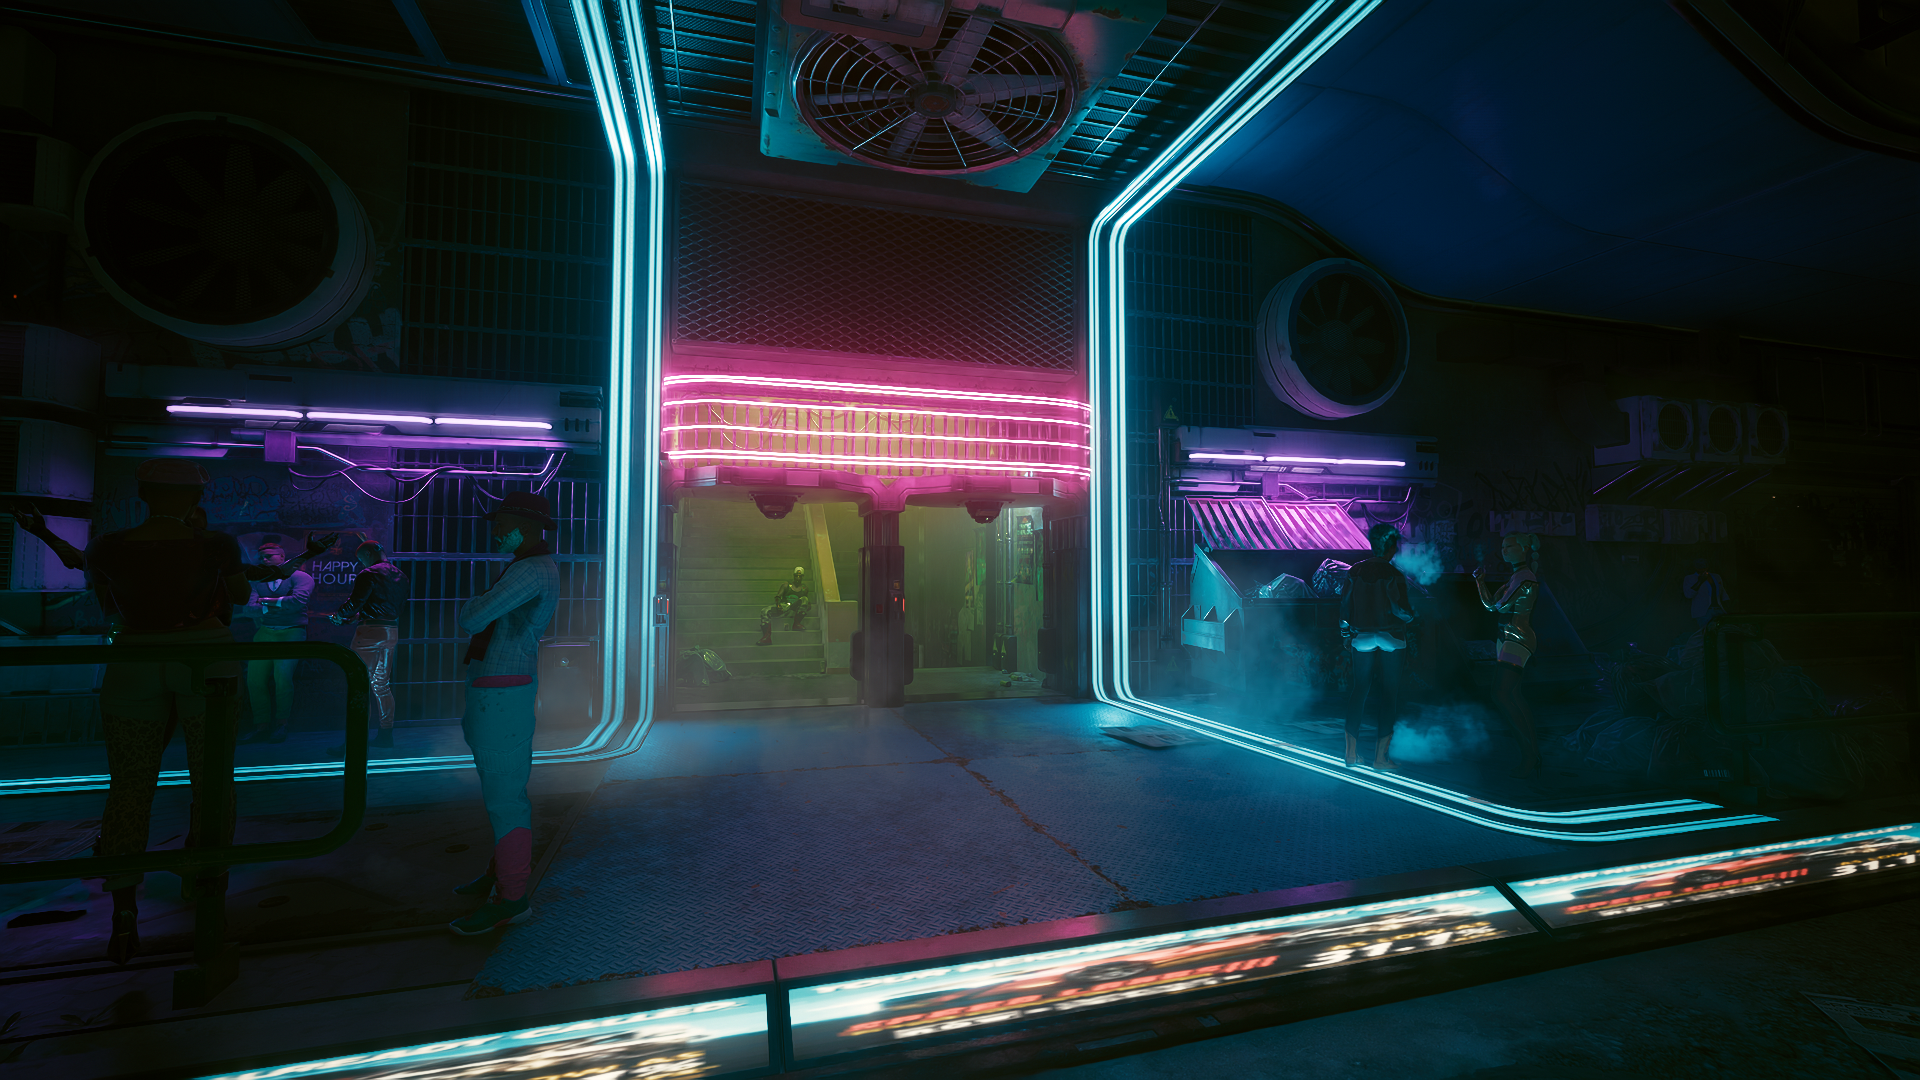 General 1920x1080 CD Projekt RED cyberpunk neon digital art video game art screen shot video game characters CGI nightclubs interior